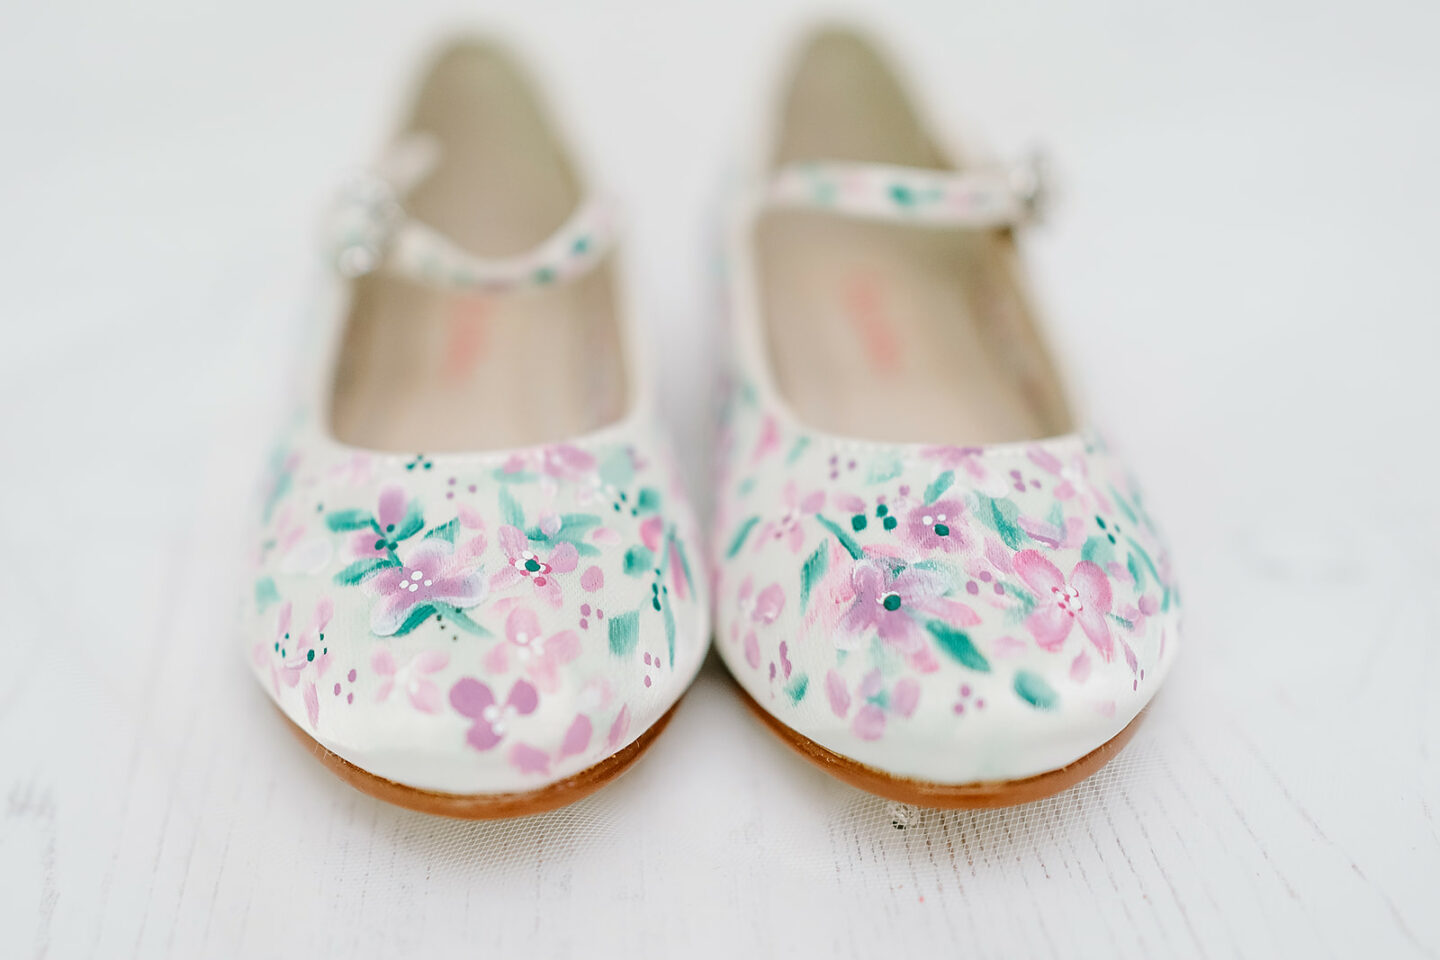 Gallery - The Pretty Wedding Shoe Company